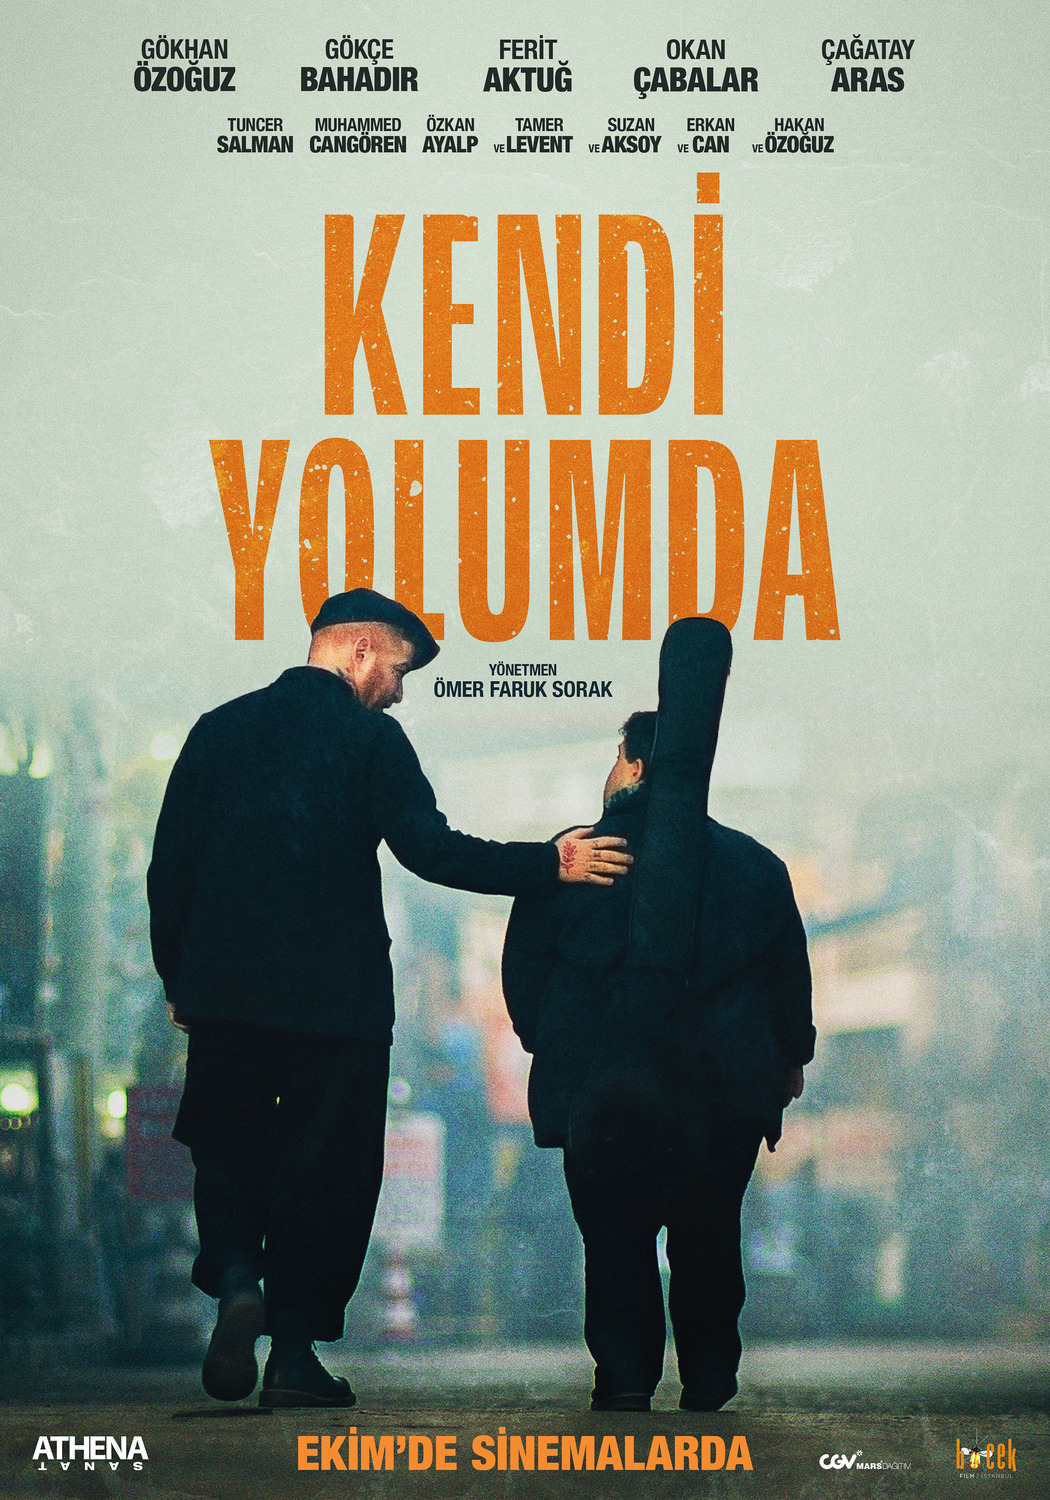 Extra Large Movie Poster Image for Kendi Yolumda 